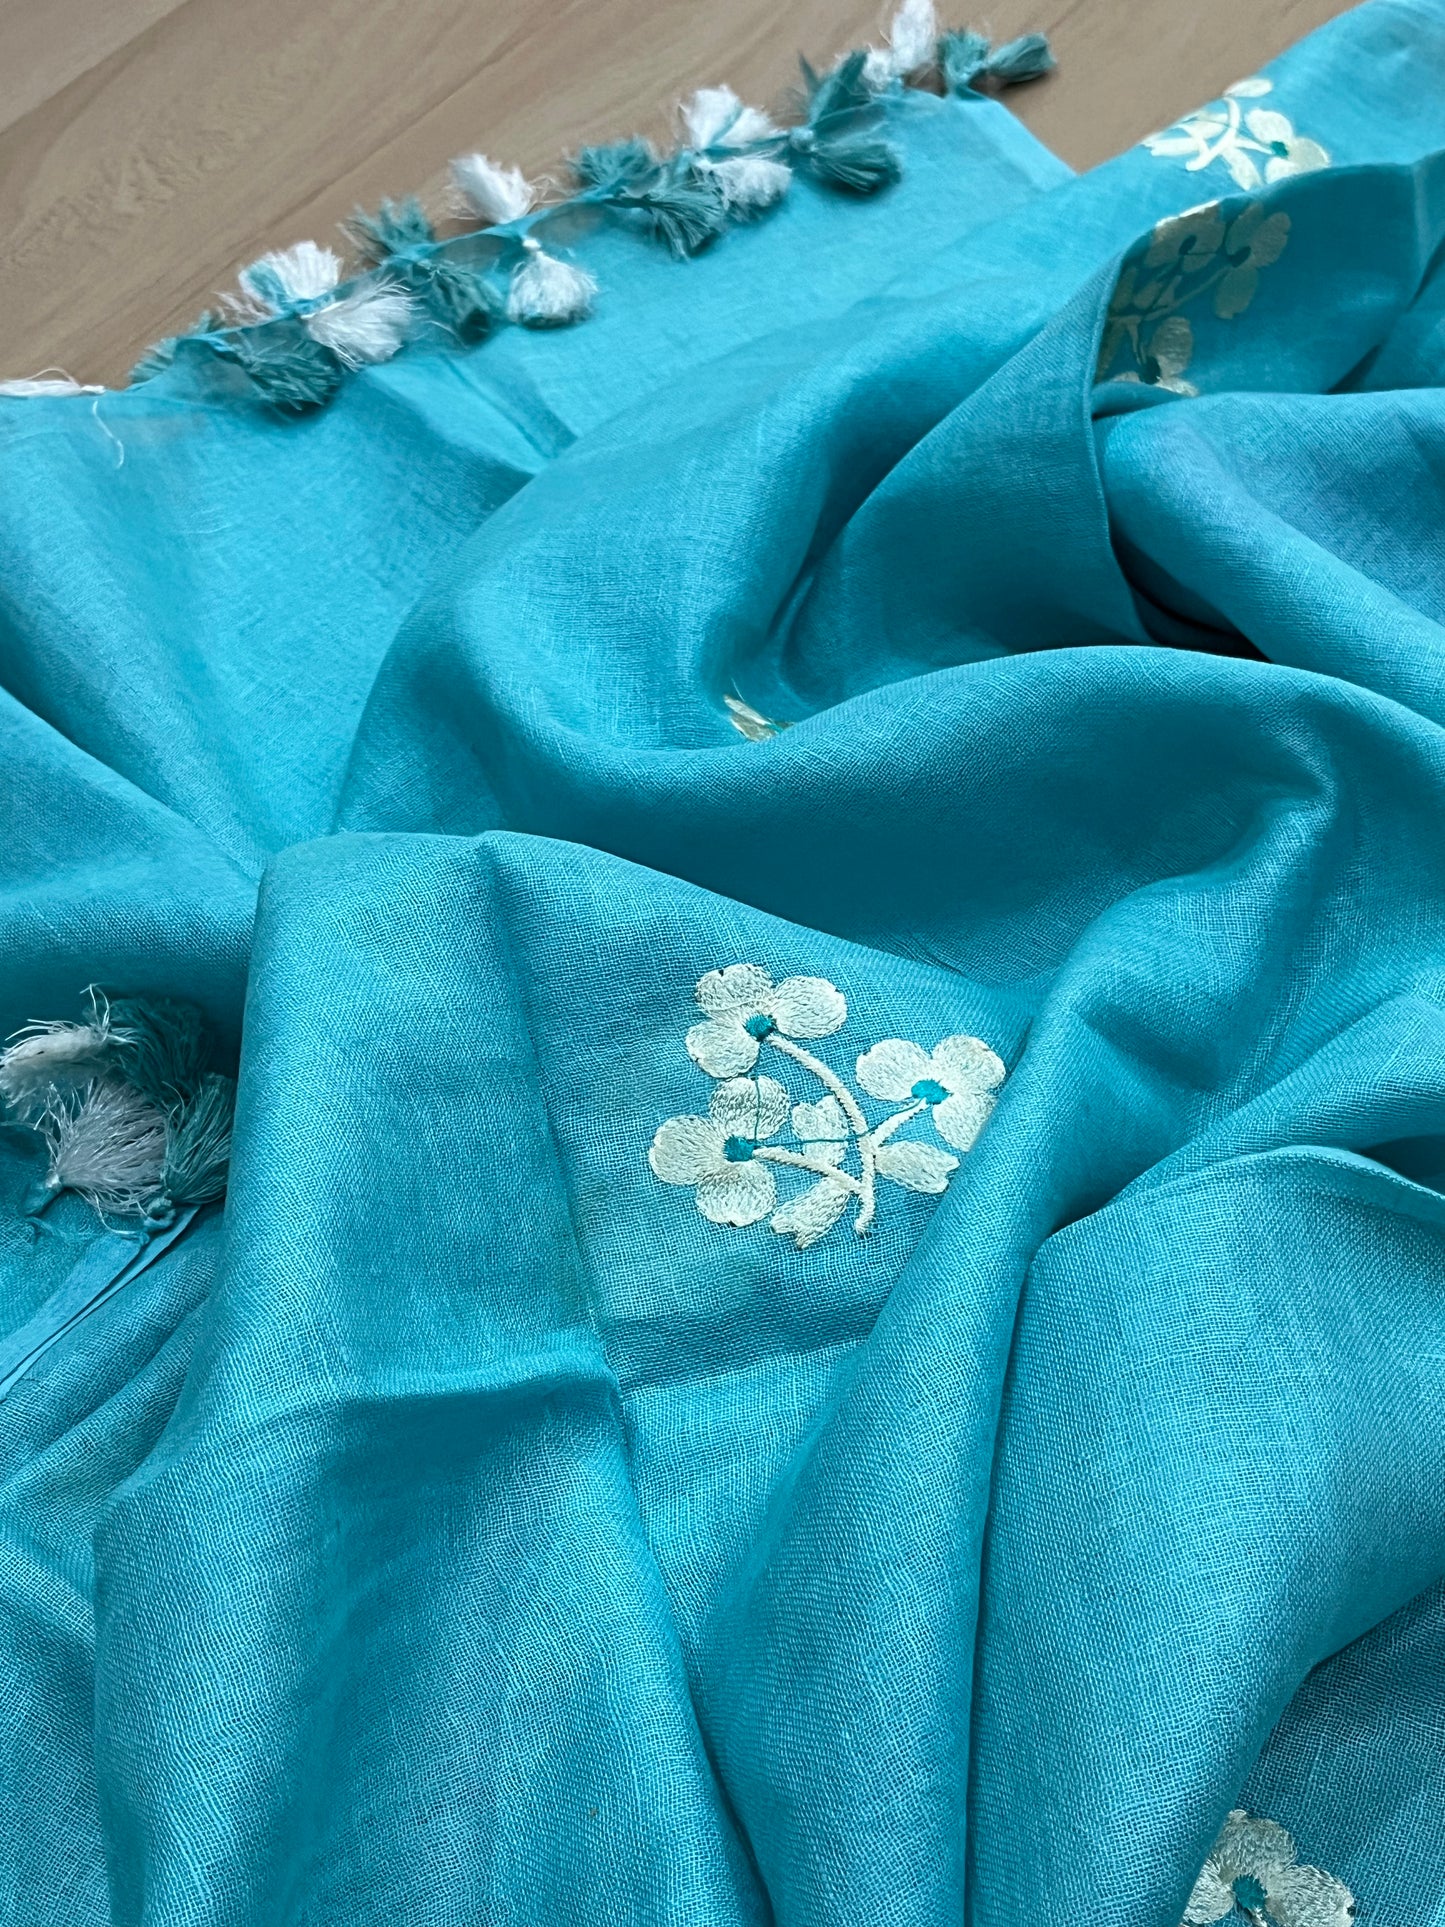 LINEN DUPATTA: Blue Linen Dupatta with embroidered flower with Tassels | KIHUMS Dupatta